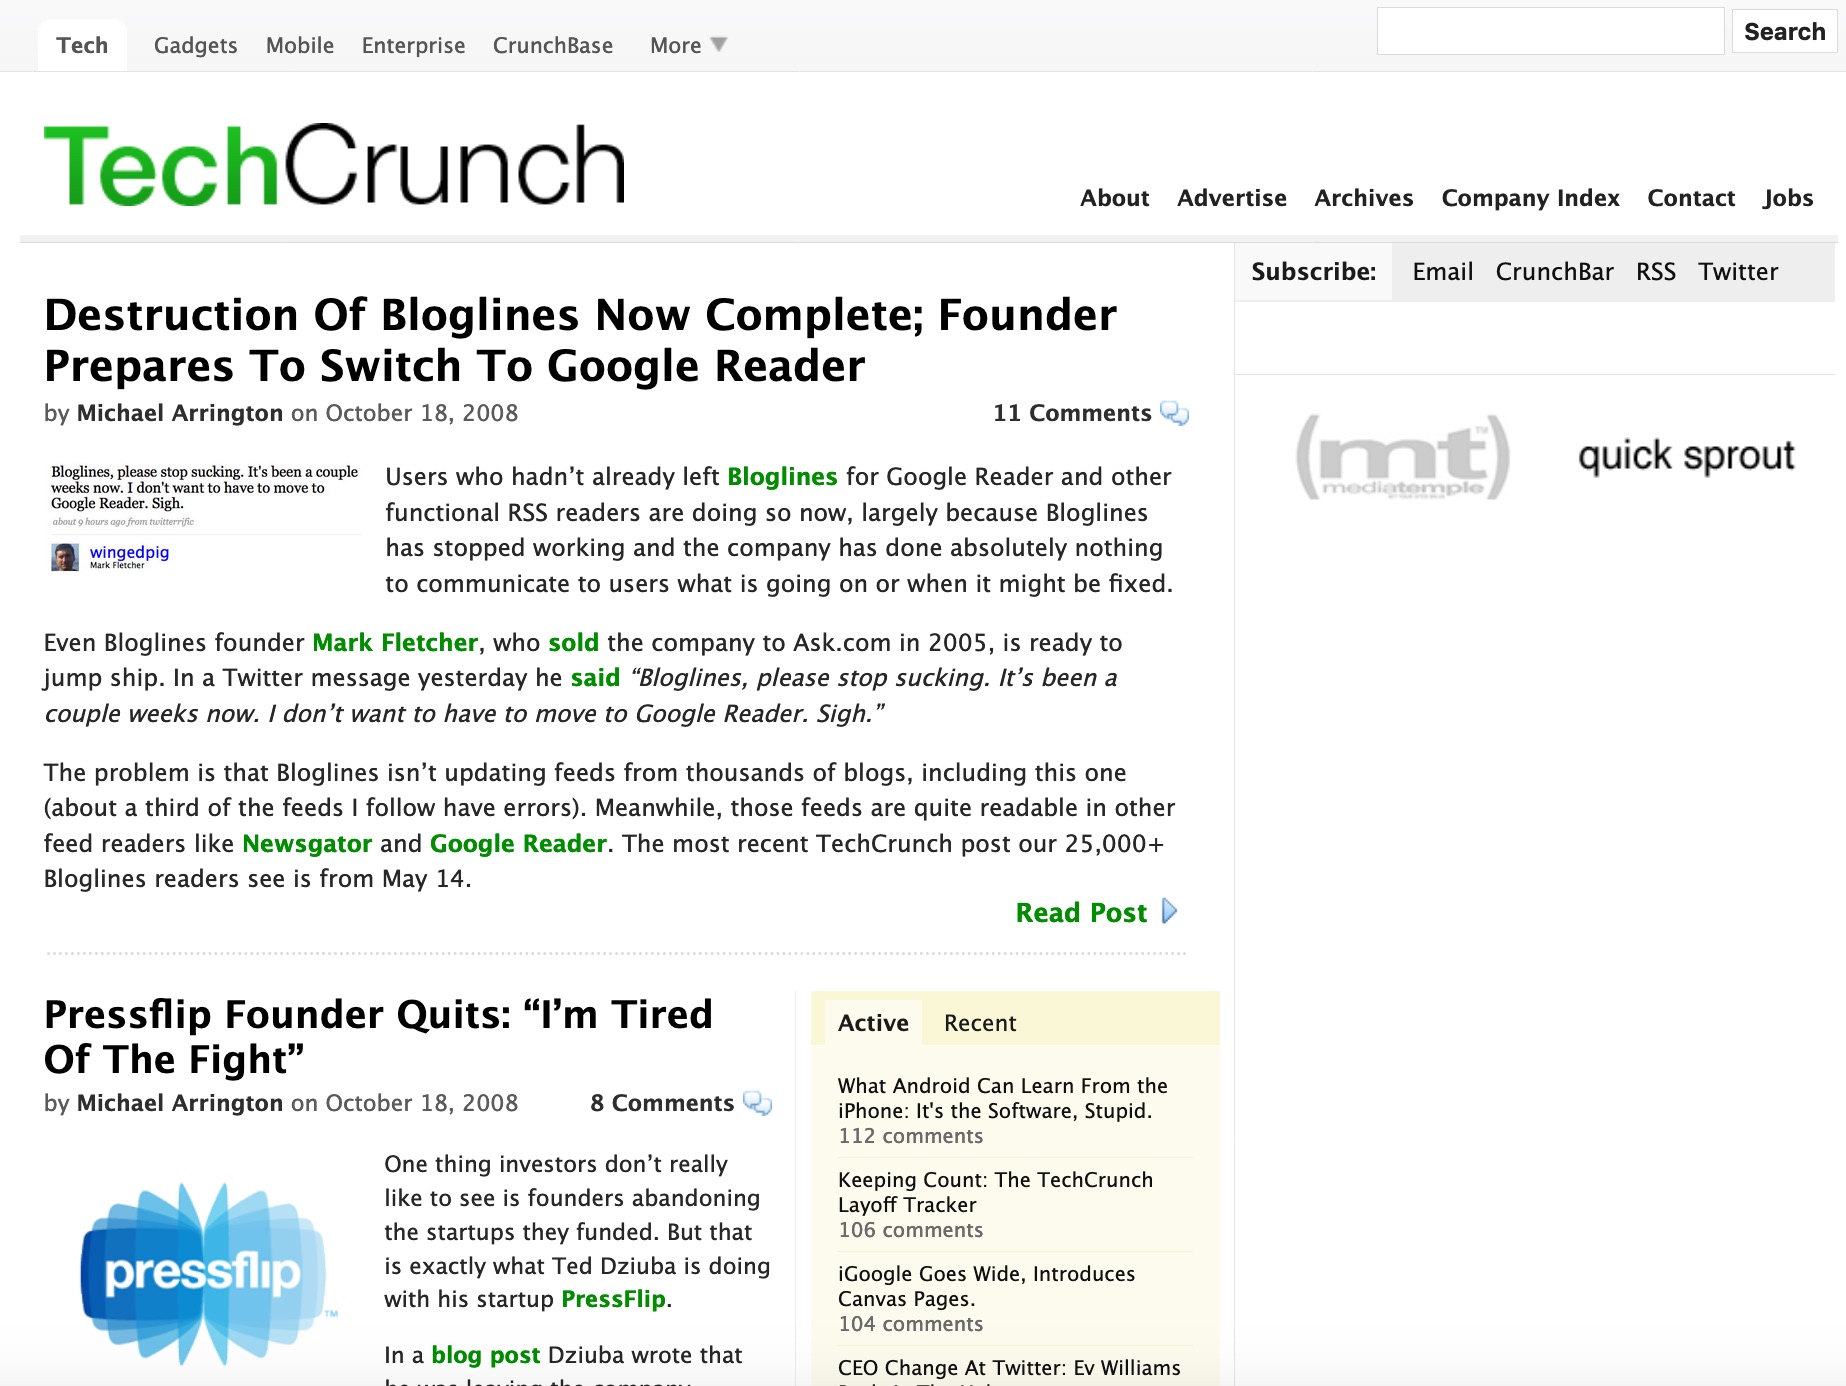 TechCrunch homepage (2008)